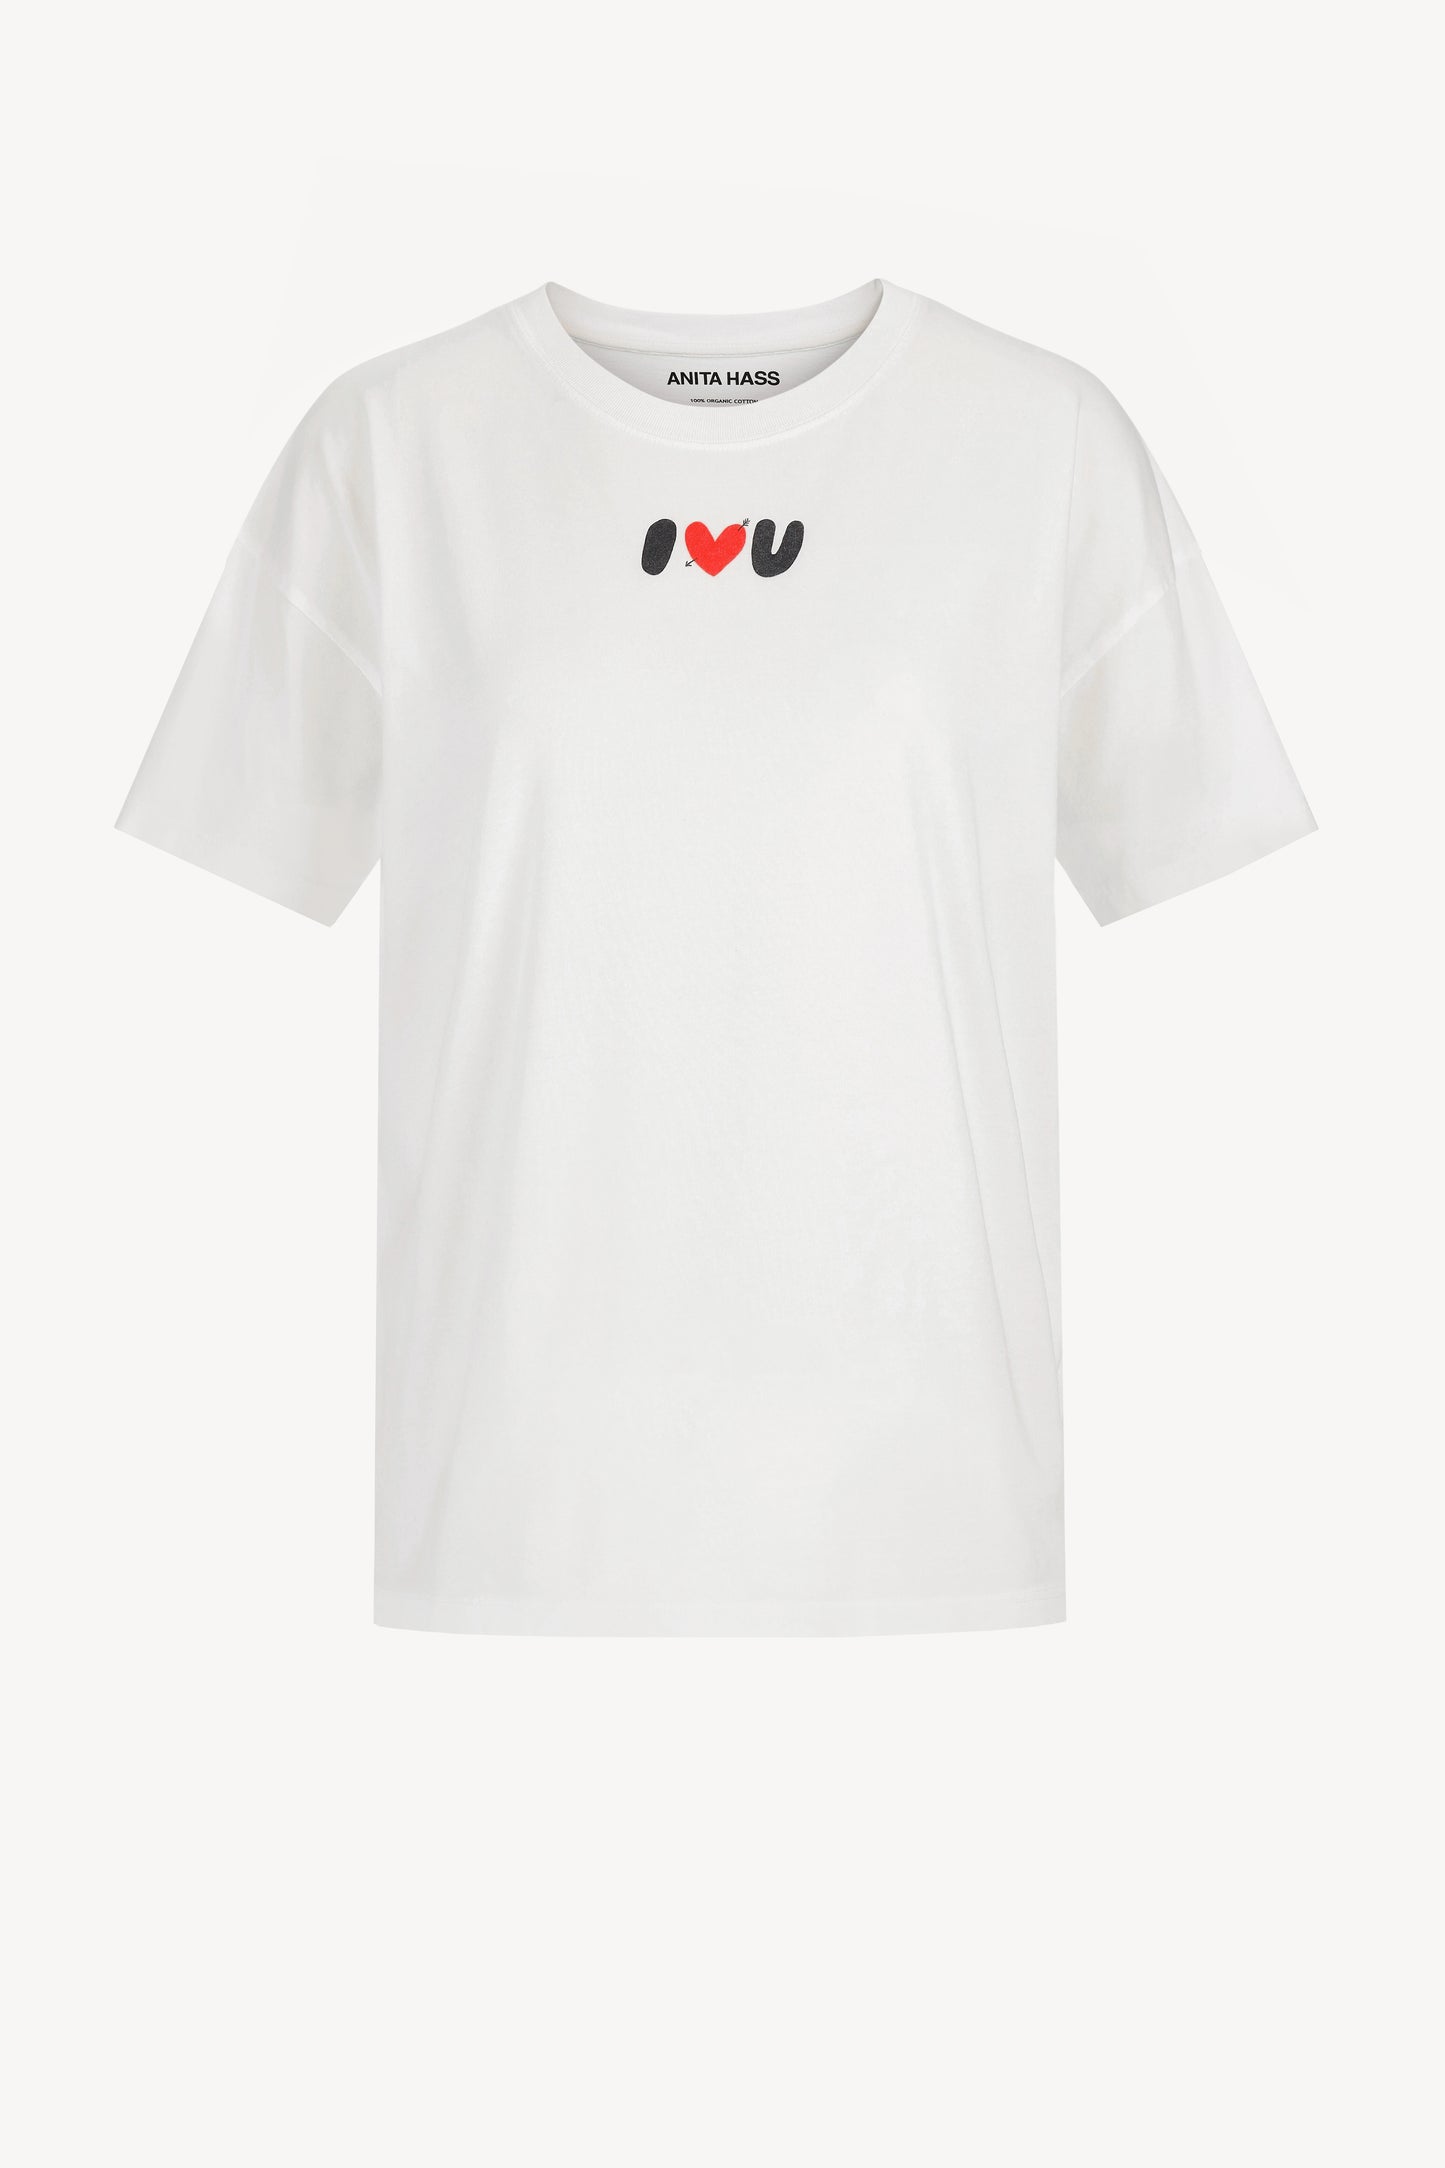 T-Shirt 'I LOVE U' in WeißAnita Hass - Anita Hass